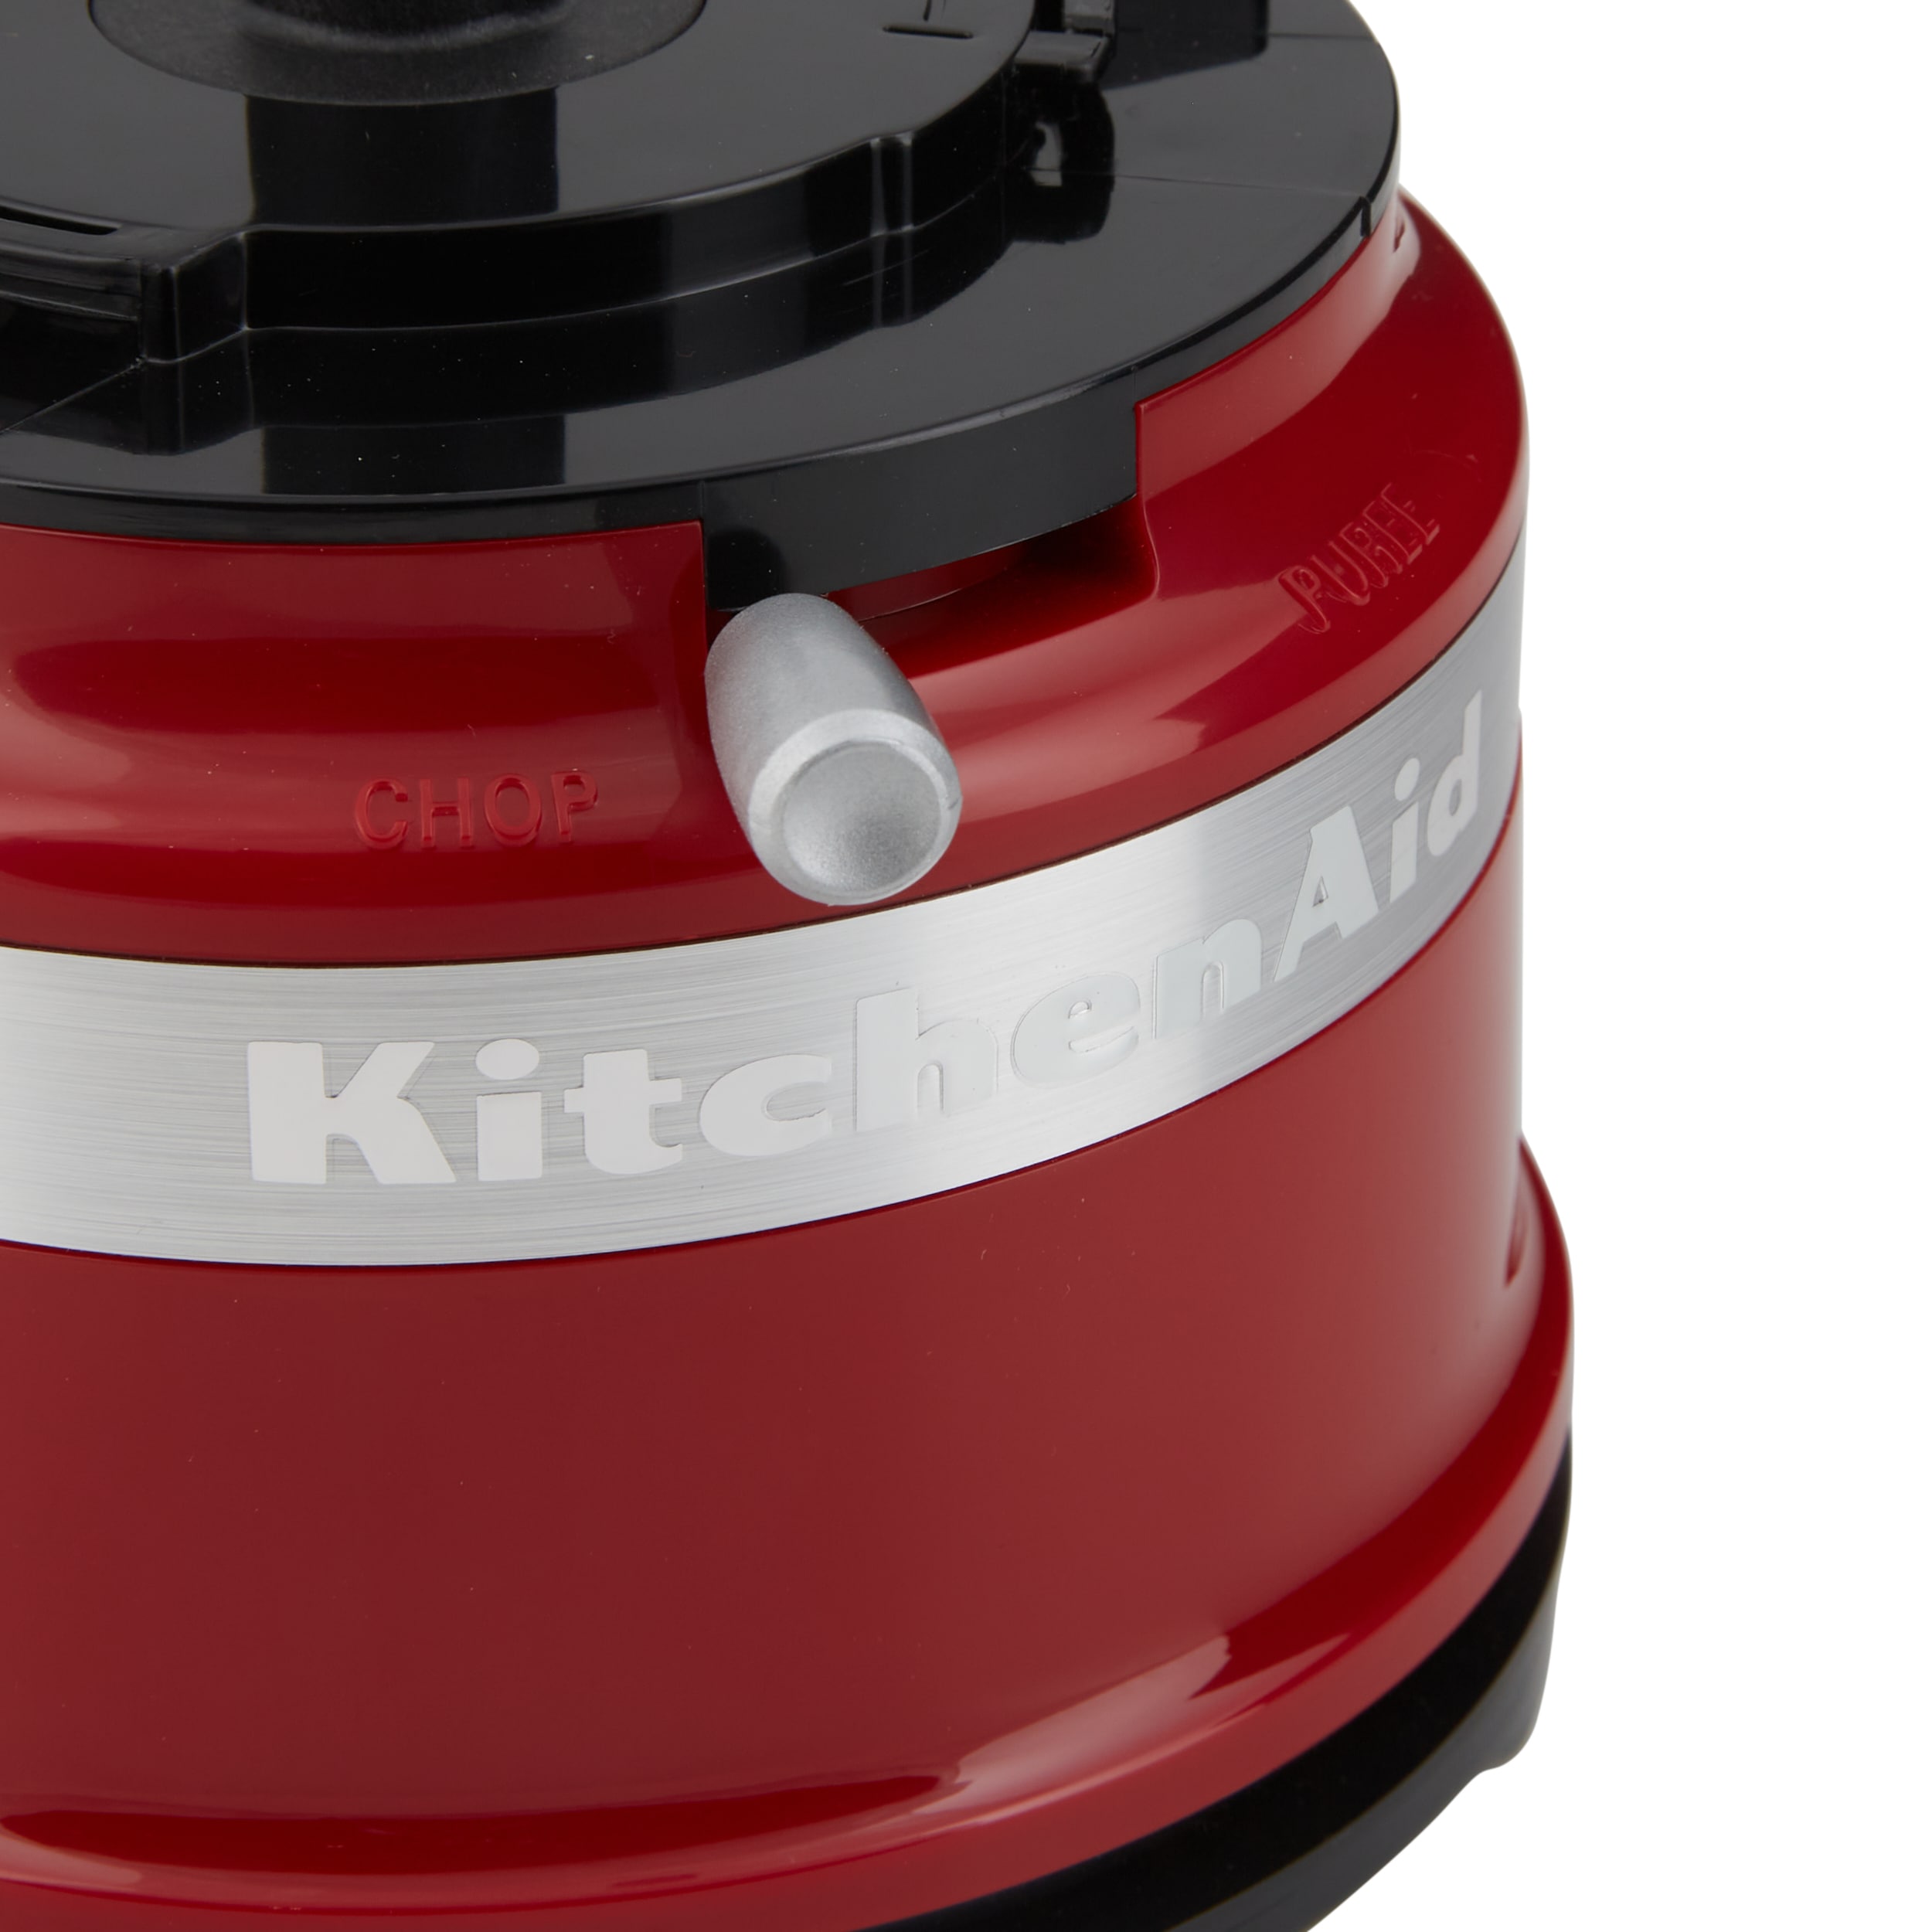  KitchenAid KFC3516ER 3.5 Cup Food Chopper, Empire Red: Home &  Kitchen